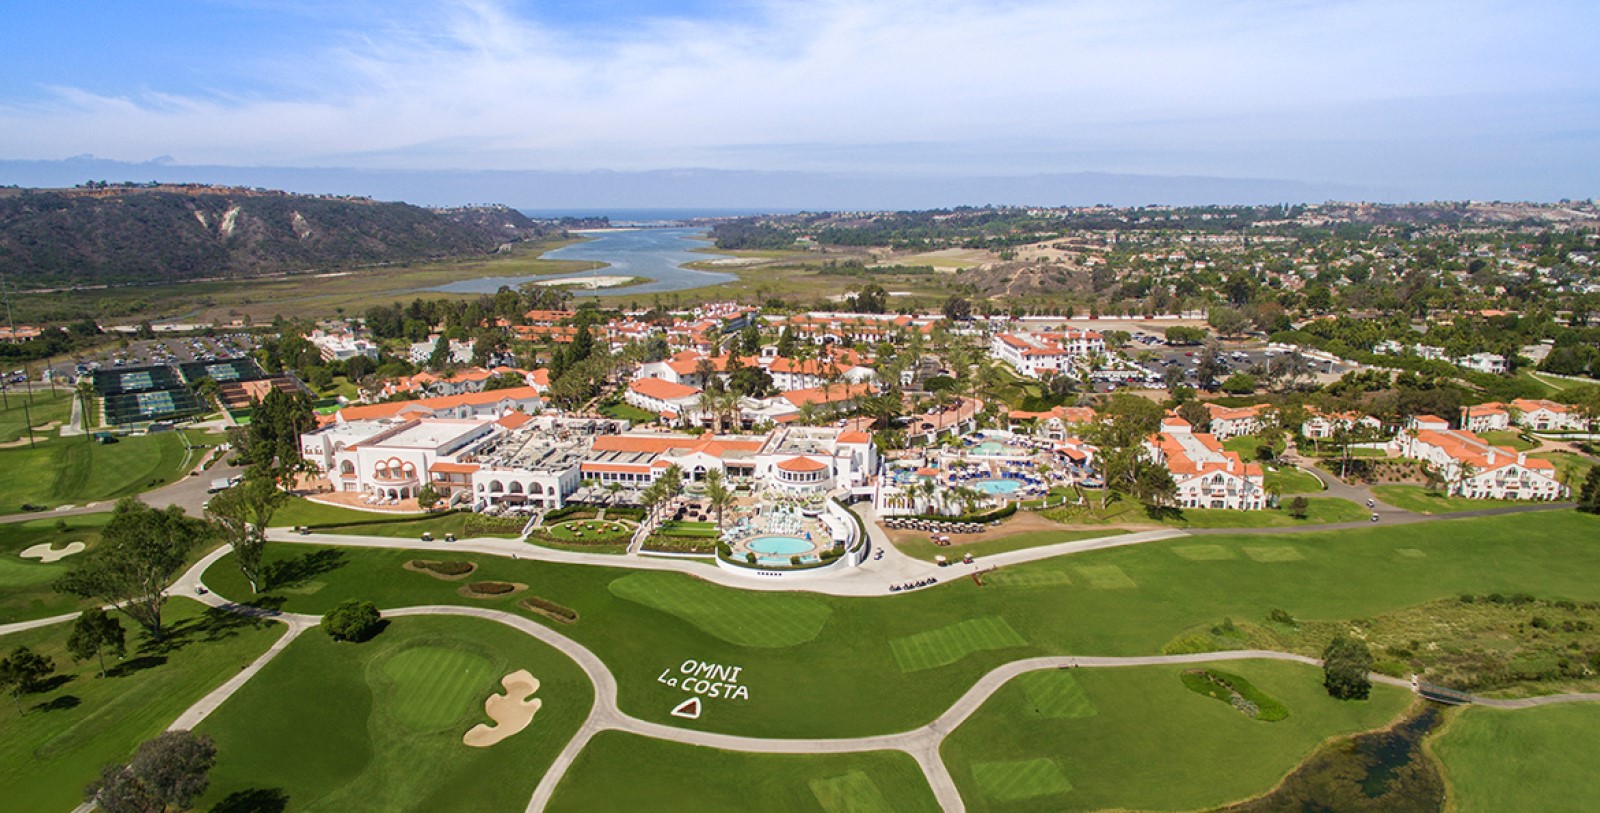 Image of Golf Links Aerial View, Omni La Costa Resort & Spa, 1965, Member of Historic Hotels of America, in Carlsbad, California.